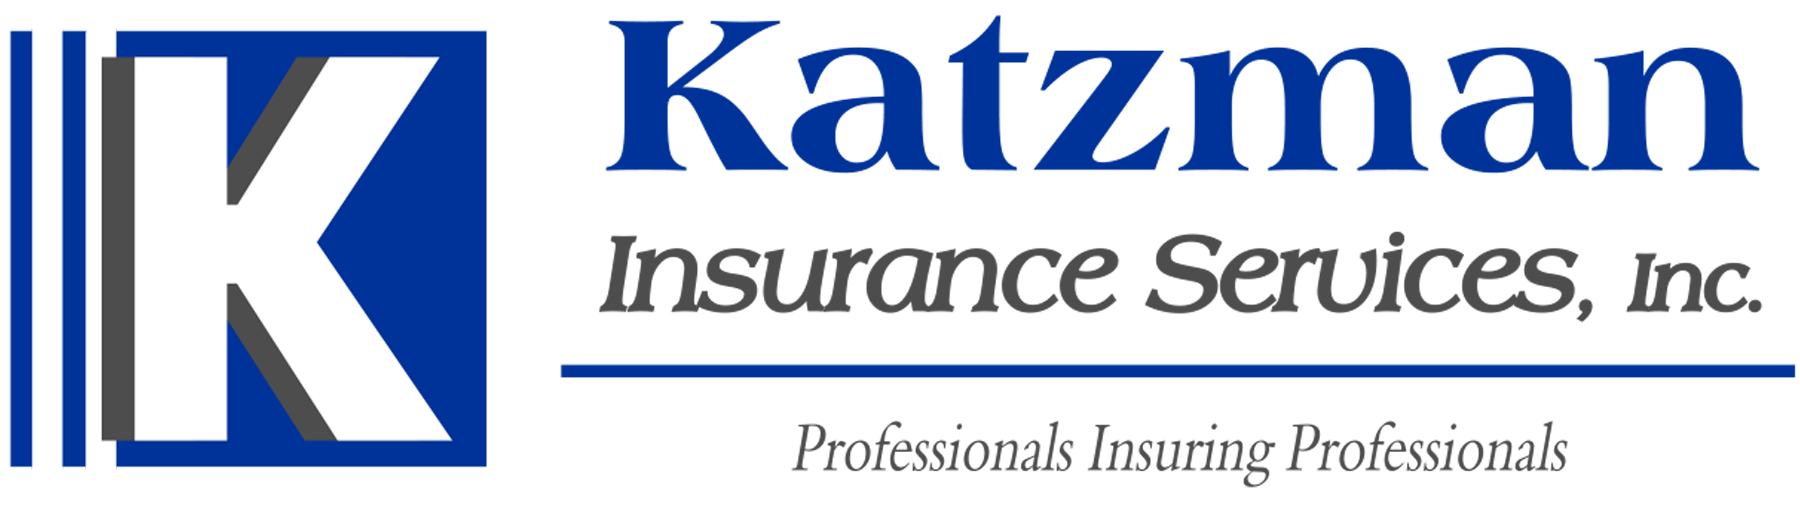 Katzman Insurance Services logo